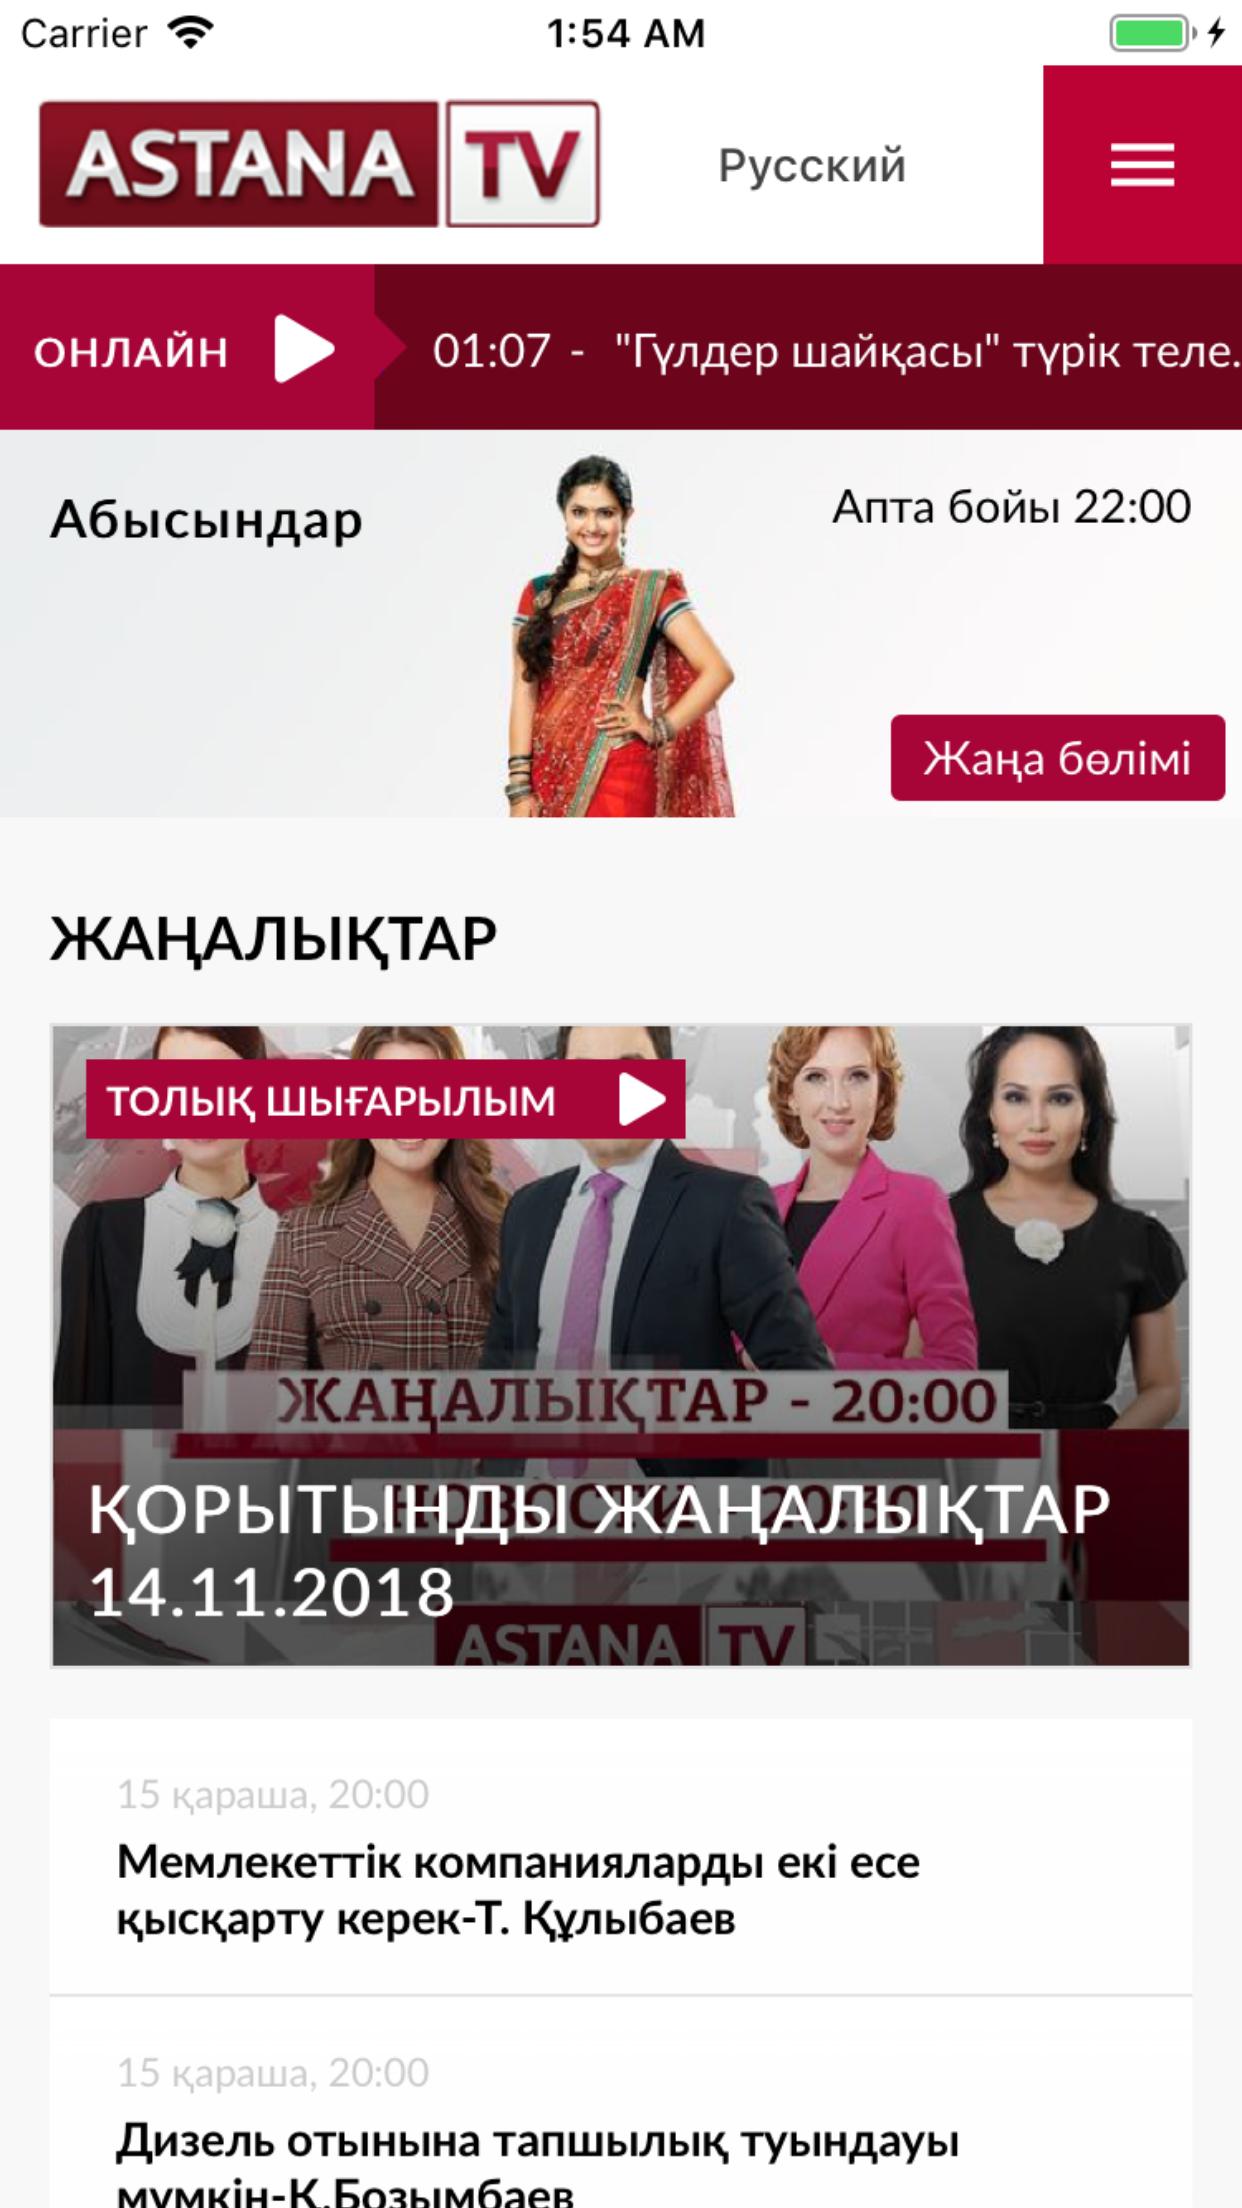 Программа астана канал на сегодня. Телеканал Астана / Astana TV. Астана ТВ 2012. Астана ТВ 2013.